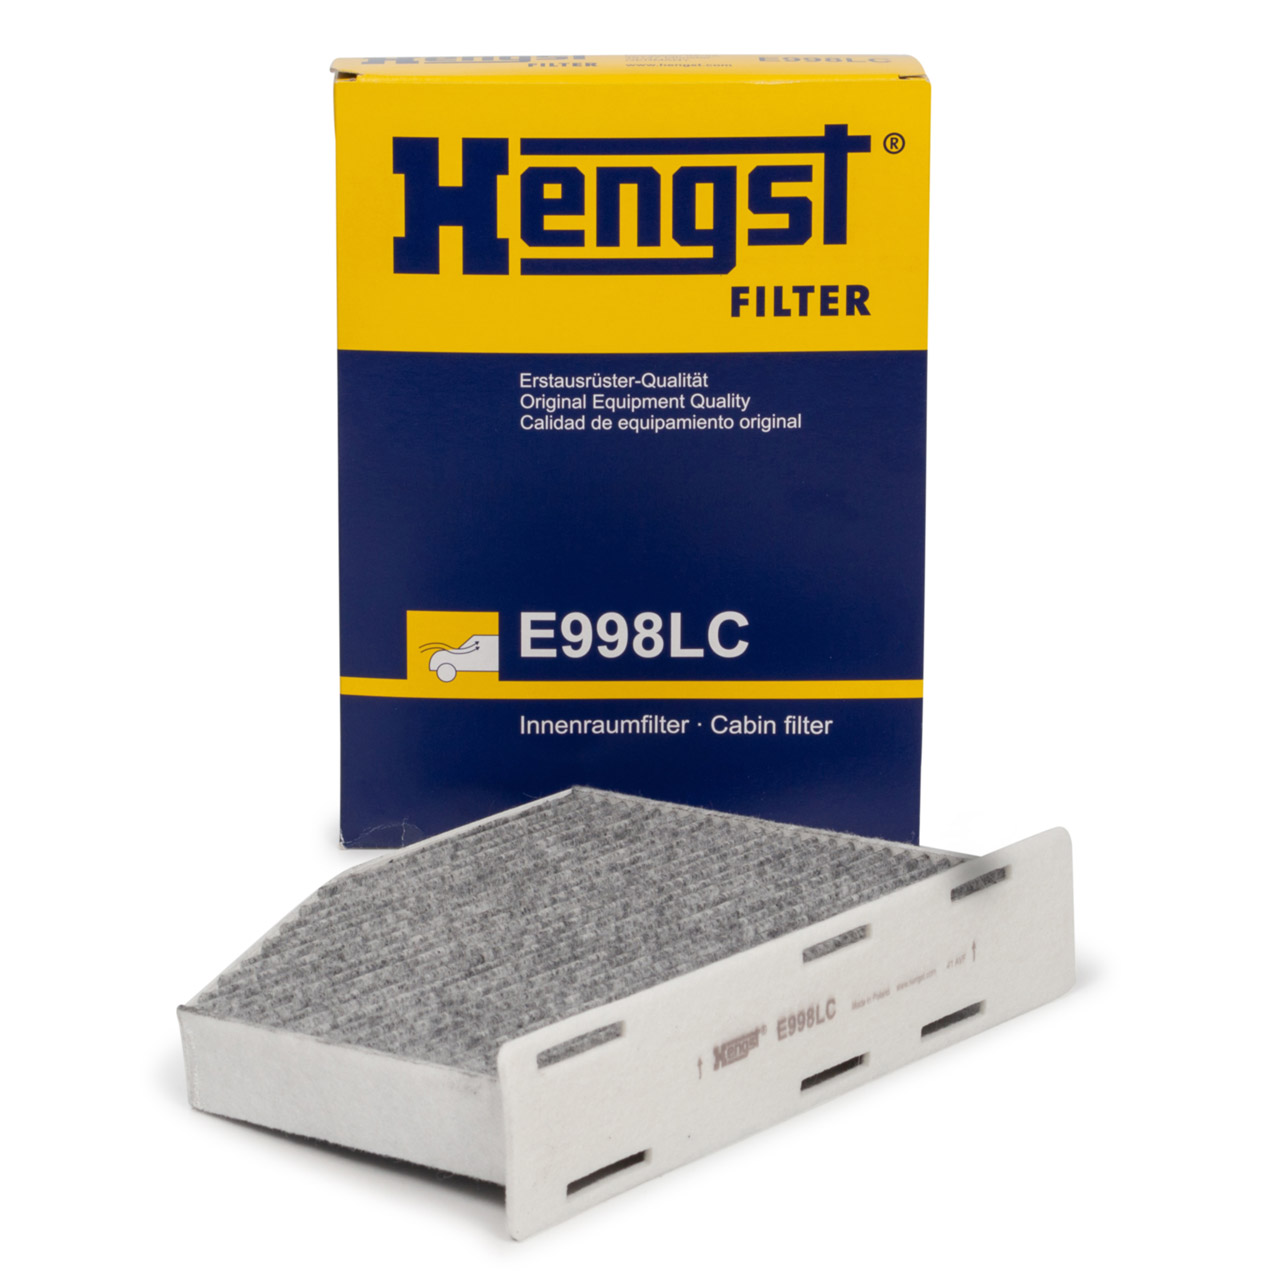 HENGST E998LC Innenraumfilter Aktivkohle für AUDI A3 SEAT SKODA GOLF 5 6 PASSAT